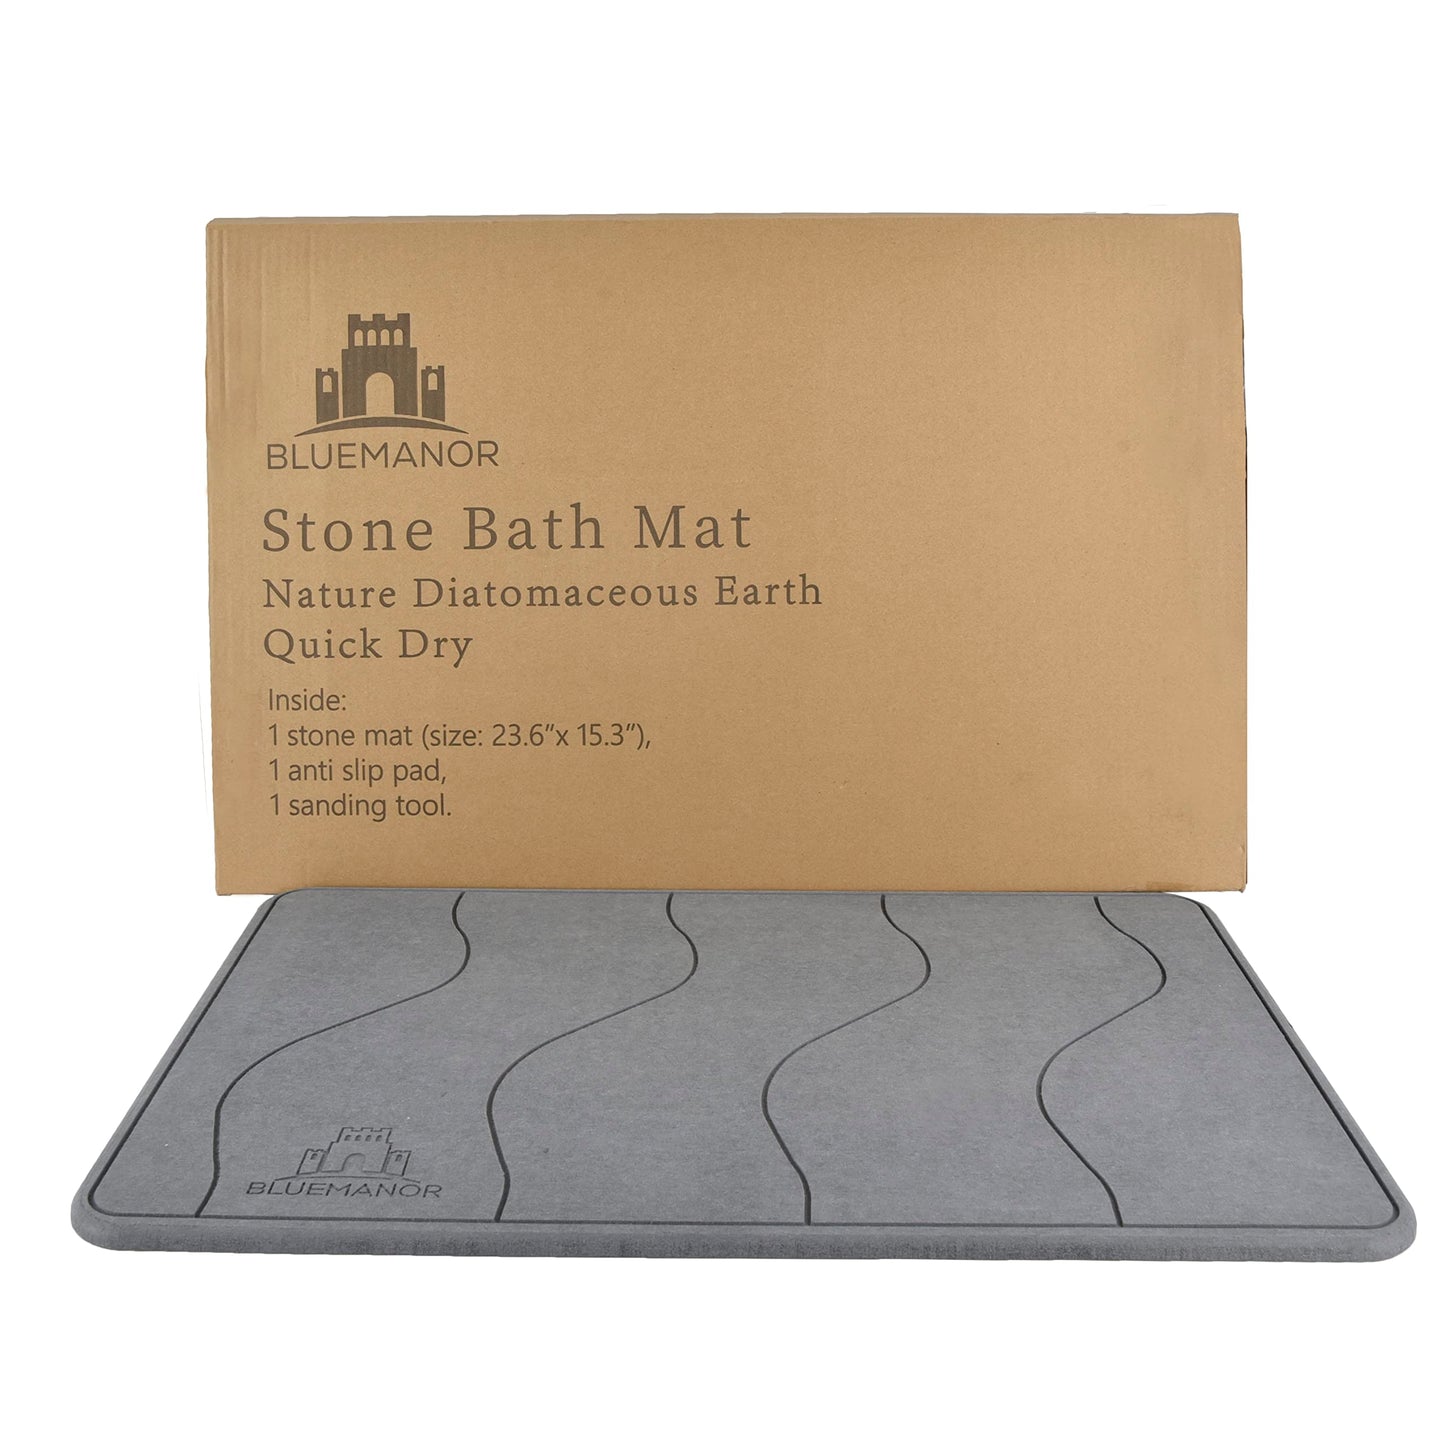 BLUEMANOR Stone Bath Mat, Ultra Absorbent Non-Slip Earth Bath Mat, Quick Drying Bathroom Floor Mat, Elegant Design, Eco-Friendly and Easy to Clean - Gray (23.6 x 15.3)